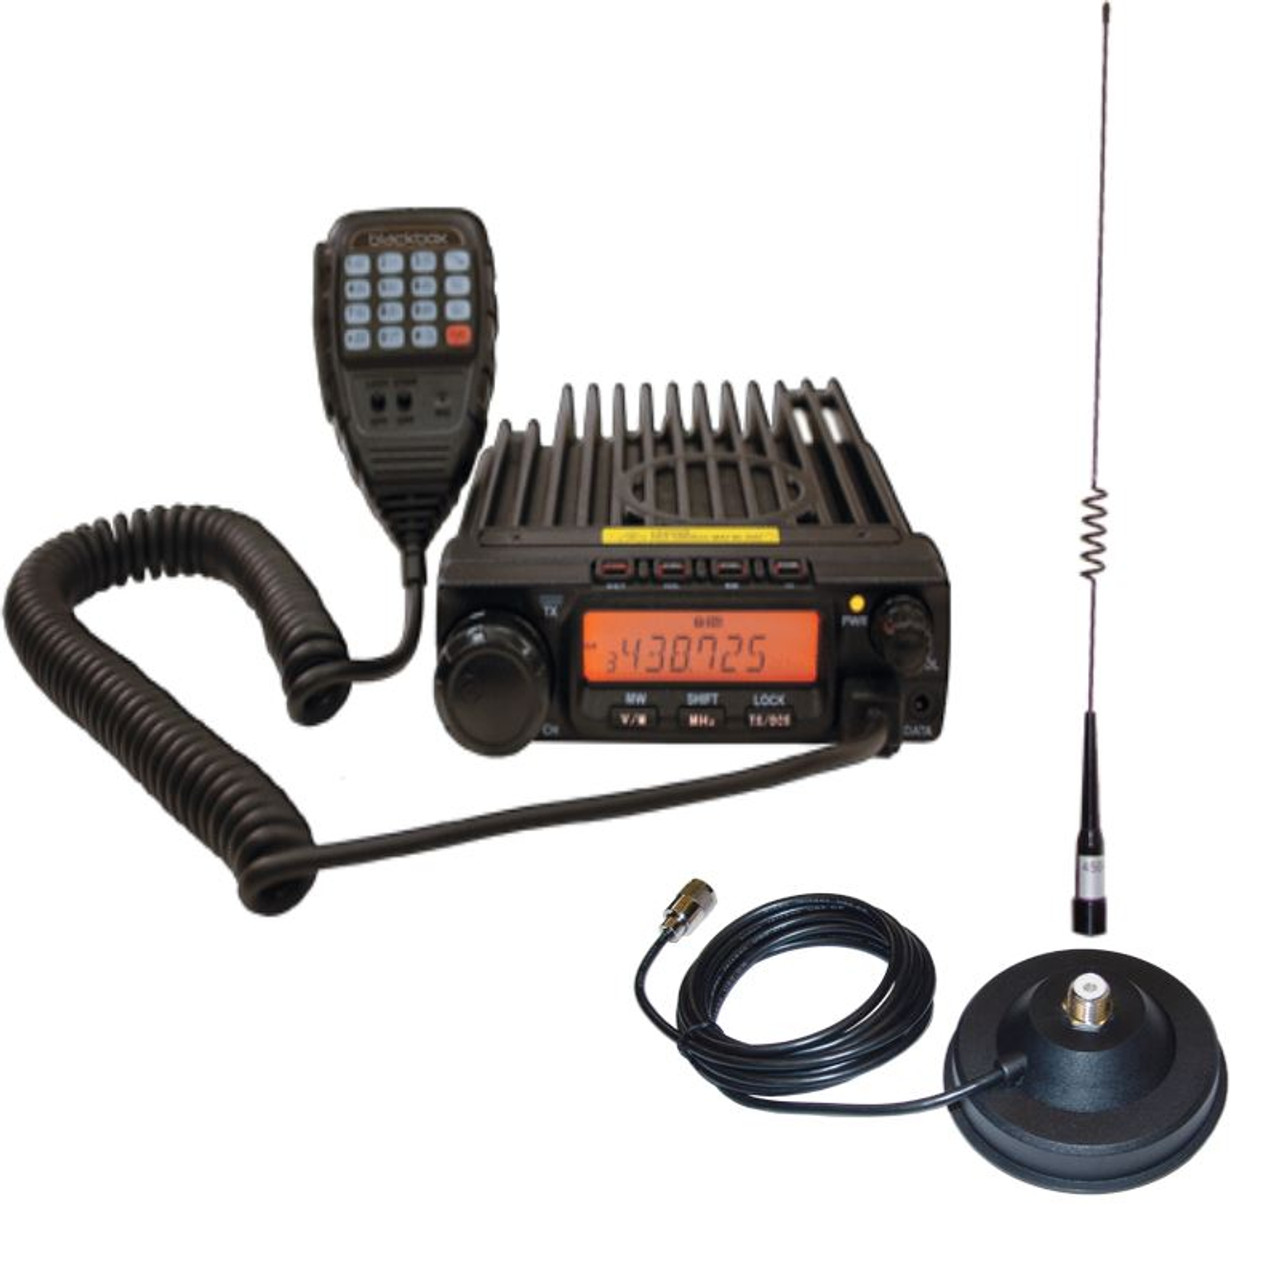 Blackbox Mobile VHF Two Way is 55 Watt, has 200 Channel and is